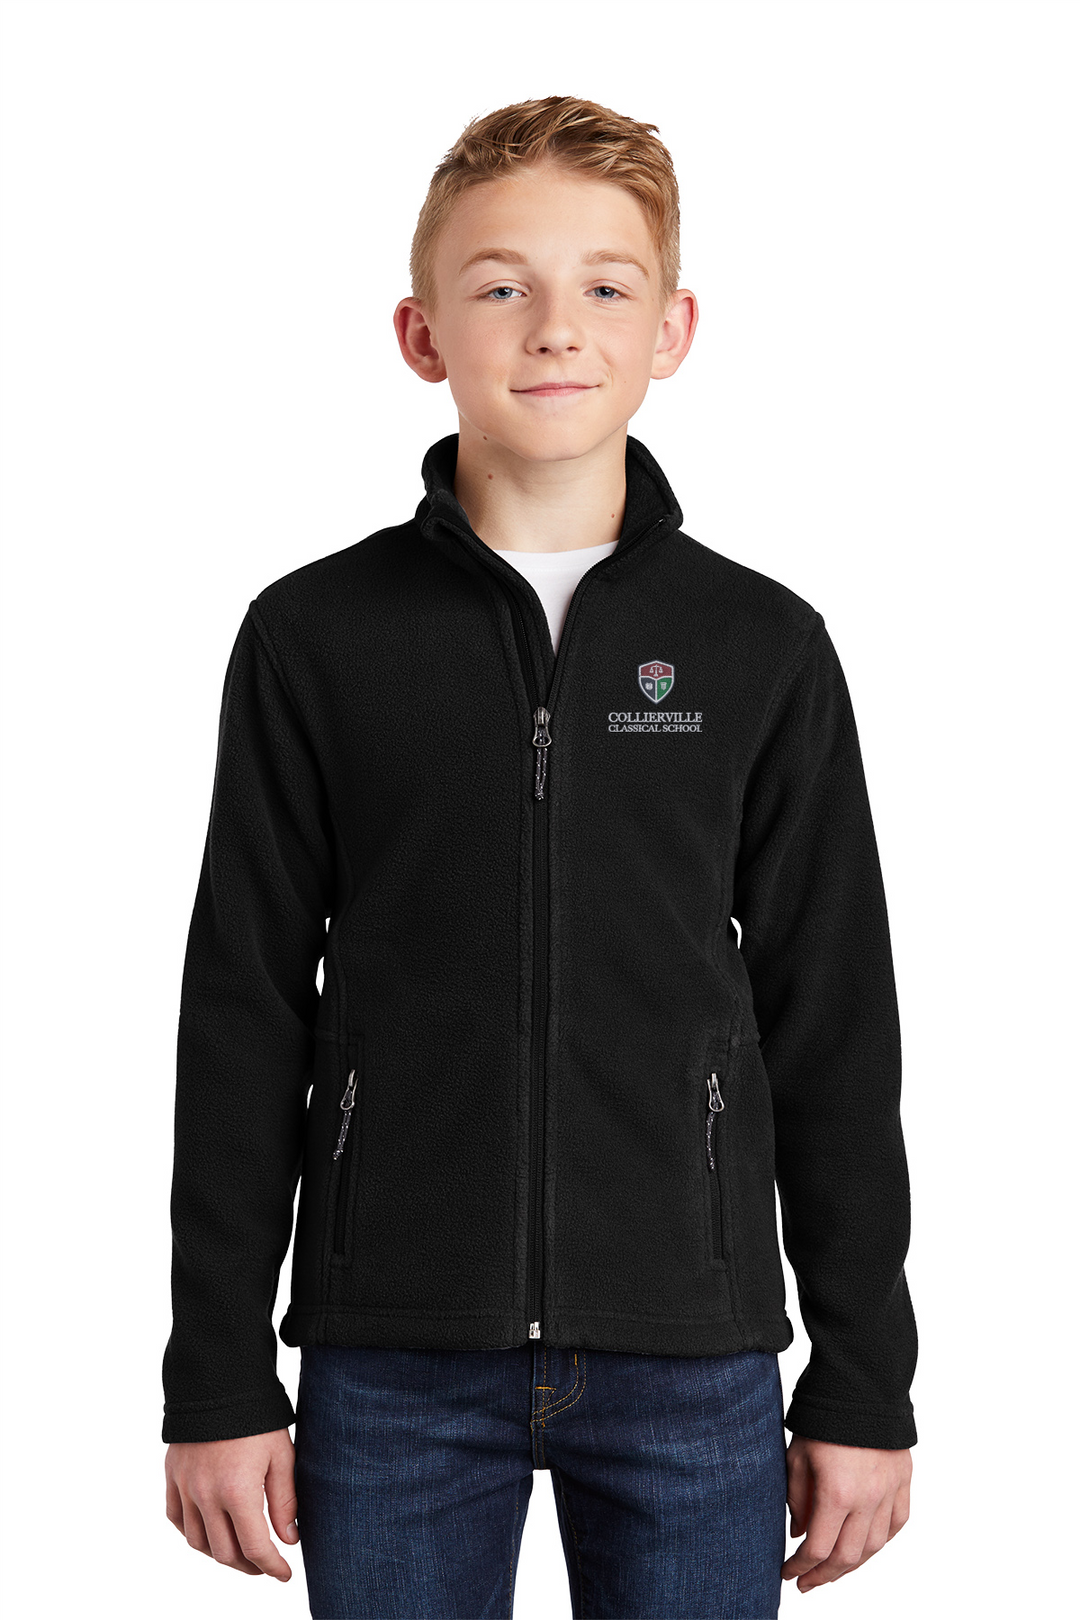 CCS - Port Authority Unisex Youth Value Fleece Jacket - Premium School Uniform from Pat's Monograms - Just $35! Shop now at Pat's Monograms